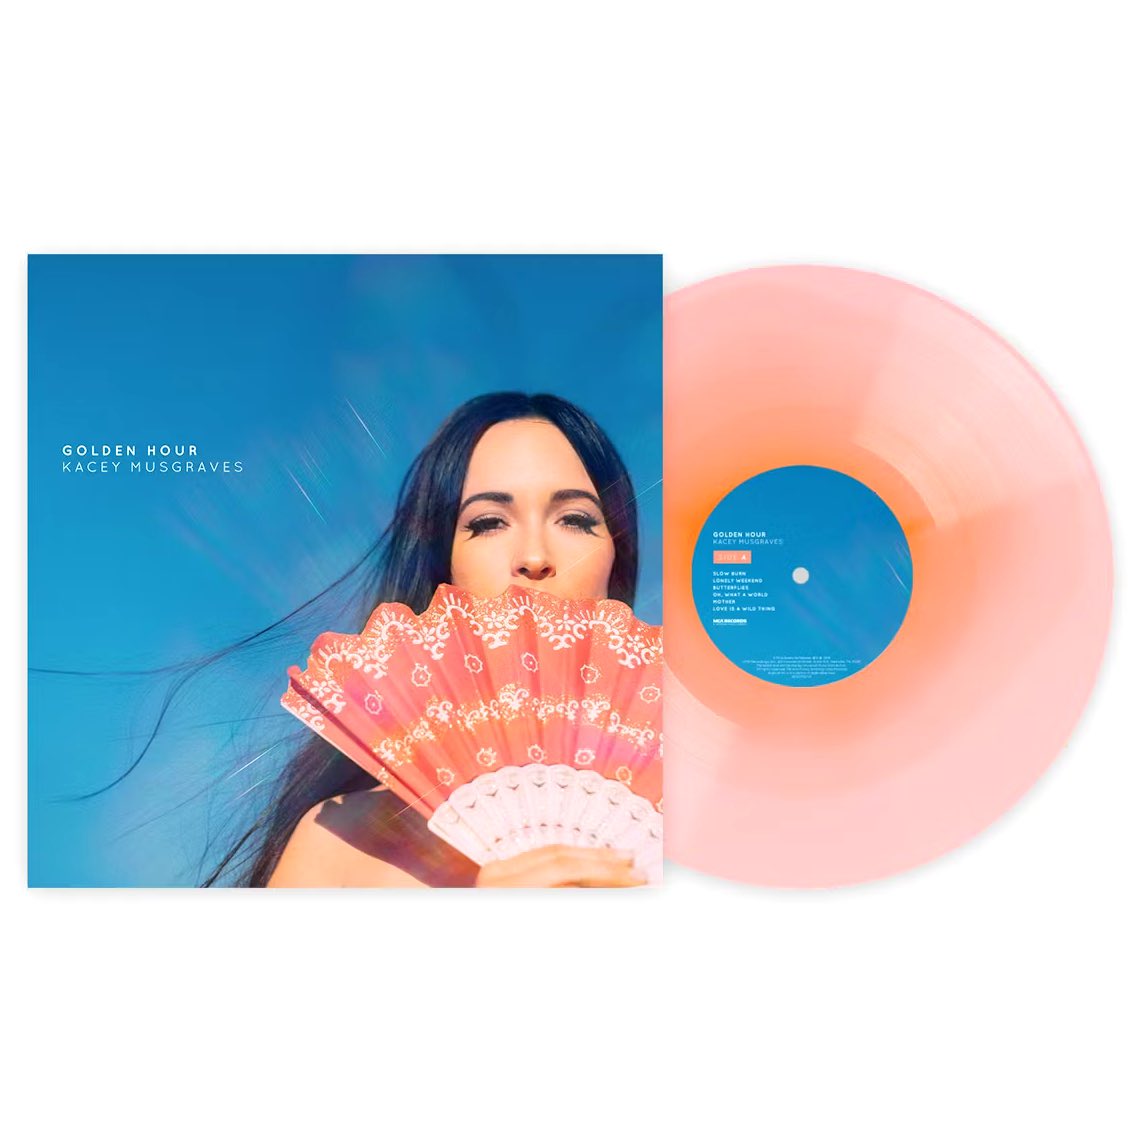 REPRESS : Kacey Musgraves - Golden hour

45$ - Orange in pink vinyl

vinylmeplease.com/products/kacey…